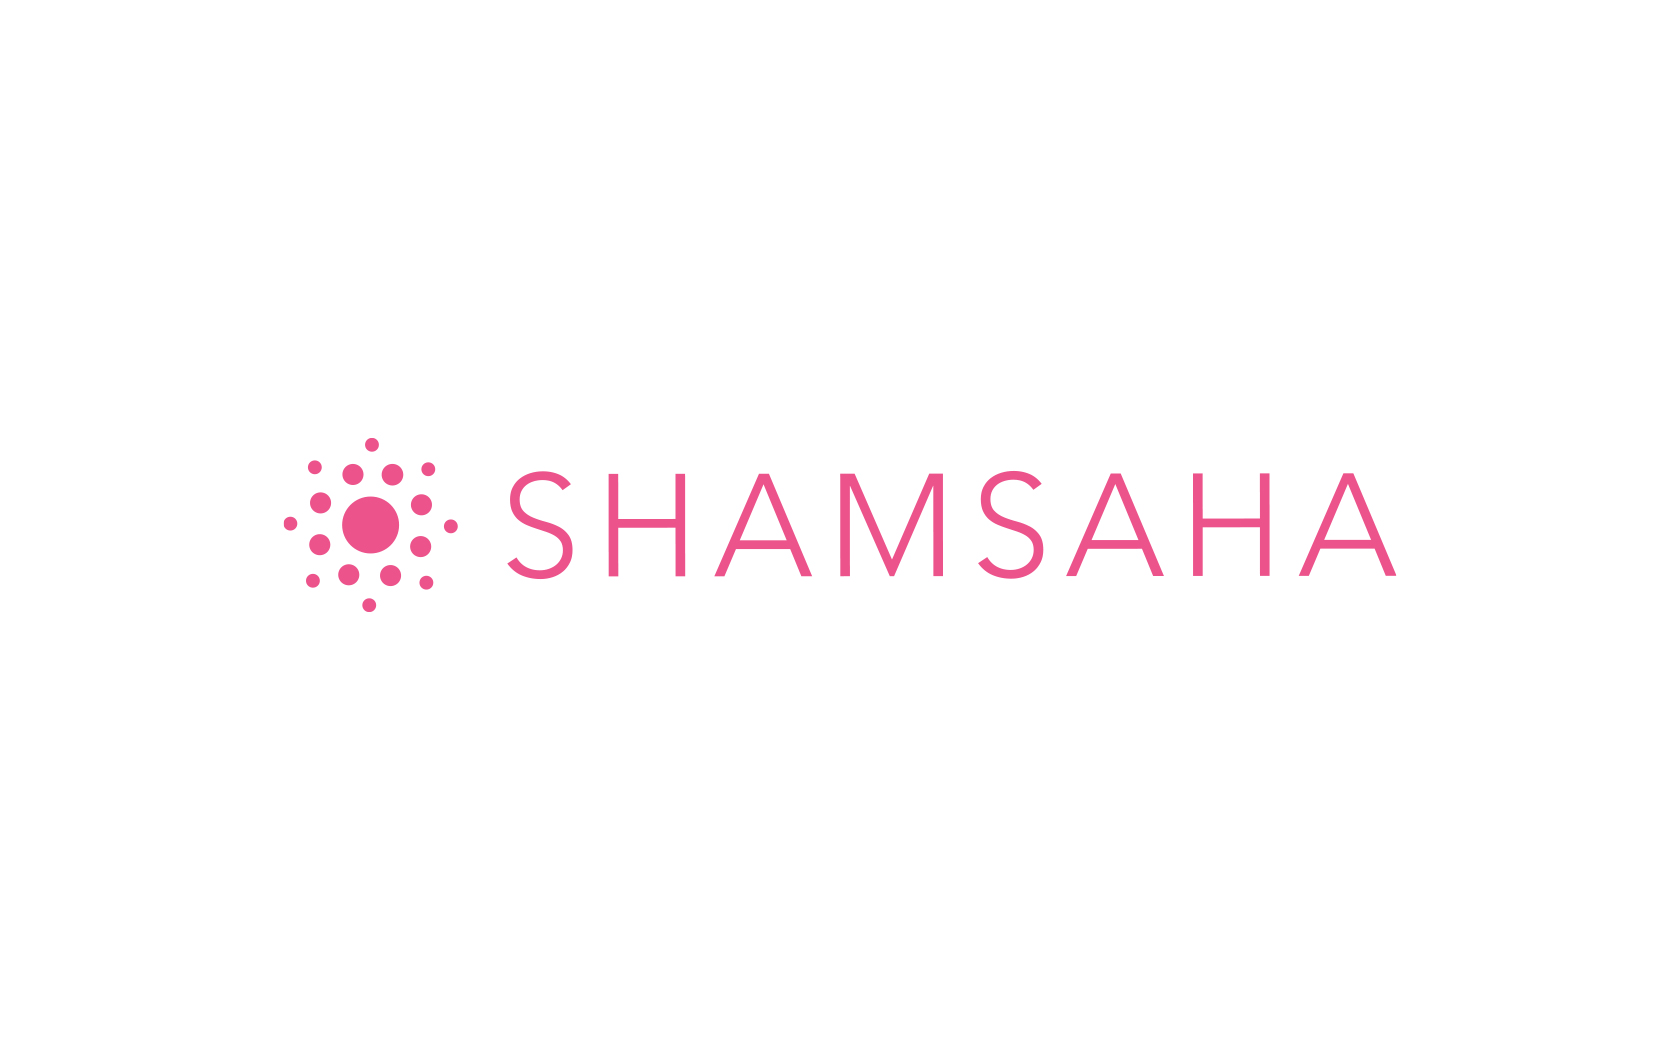 Shamsaha. Brand logo in pink